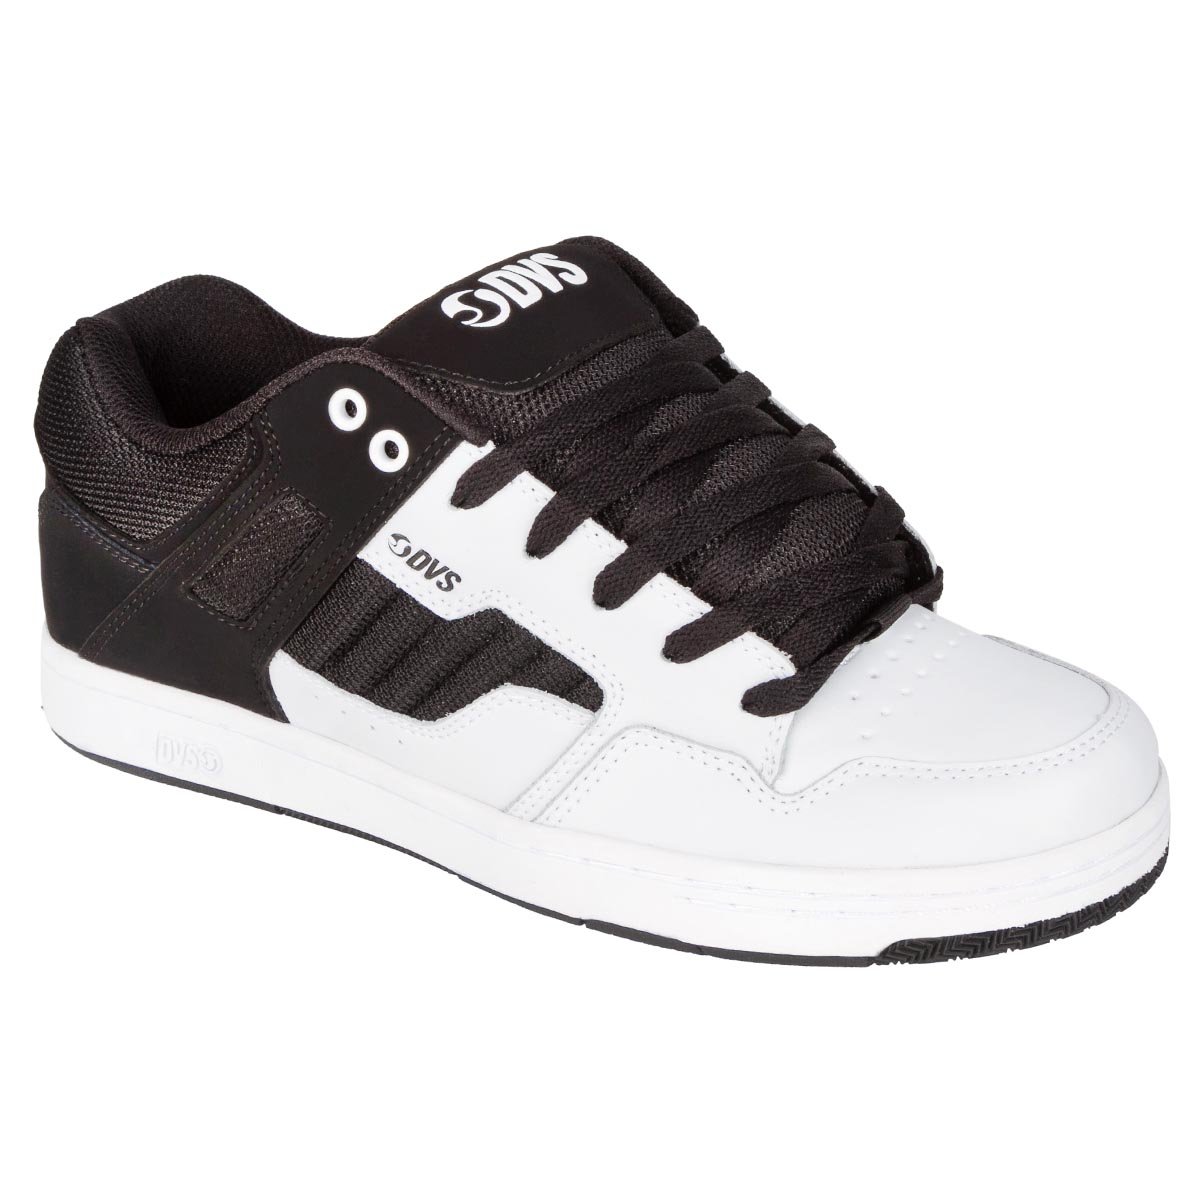 DVS Shoes Enduro 125 White Black Leather